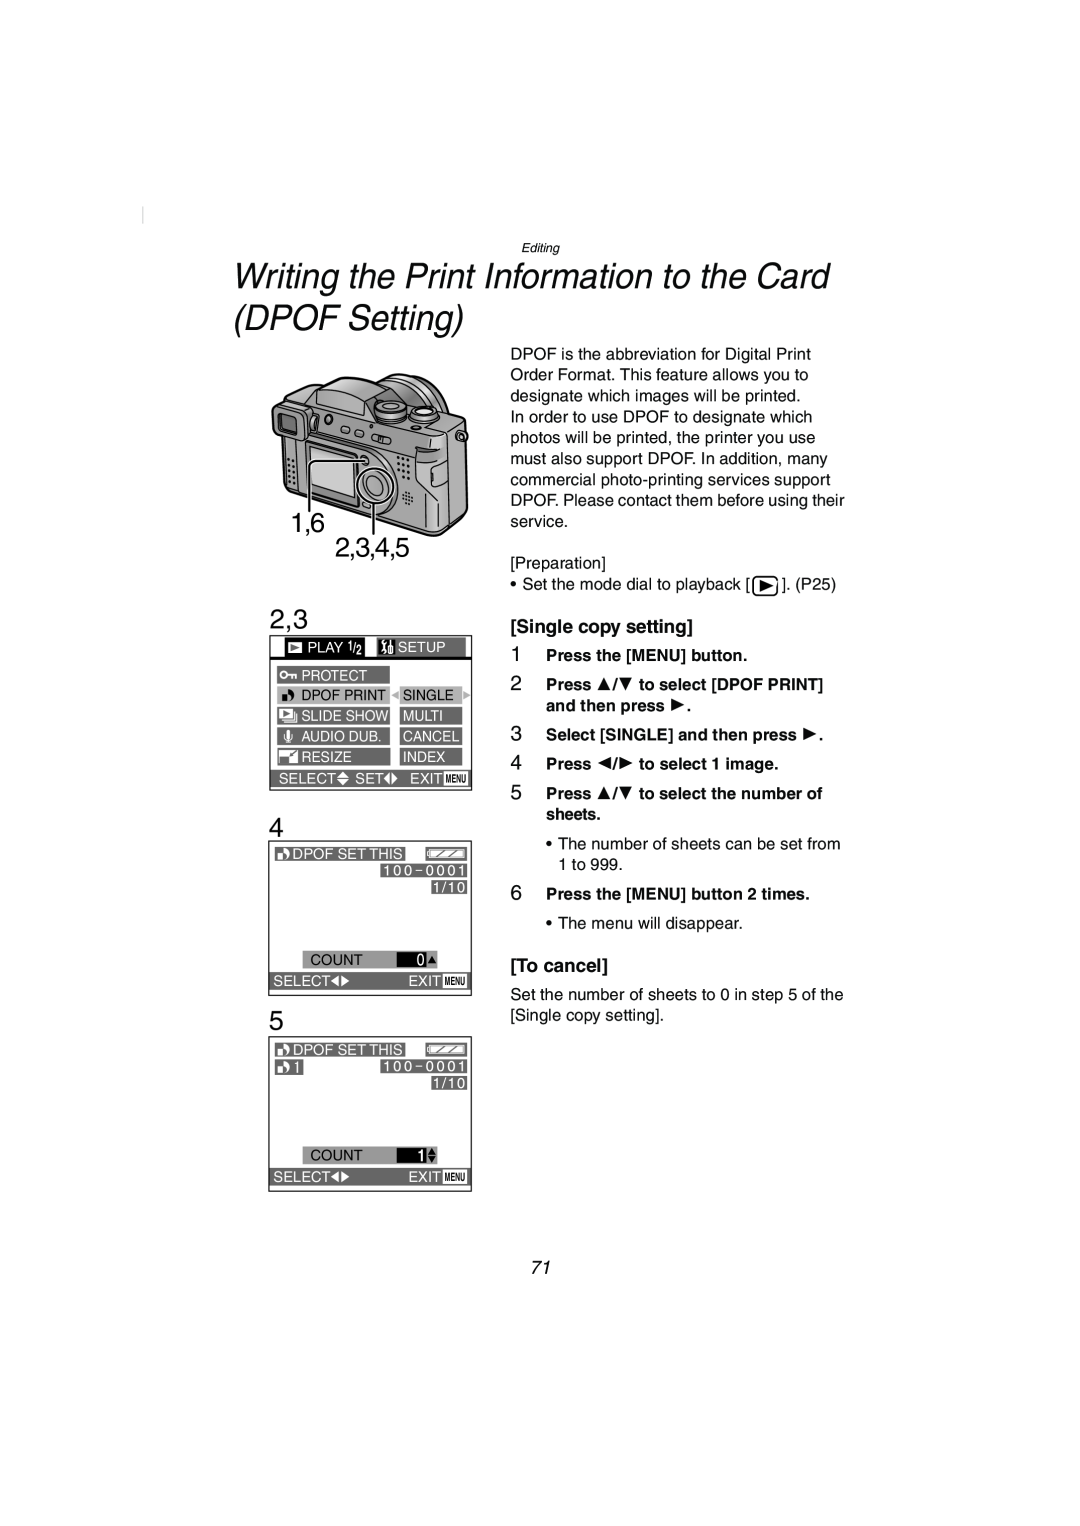 Panasonic DMC-FZ2PP Writing the Print Information to the Card DPOF Setting, 1,6 2,3,4,5, Press the MENU button 